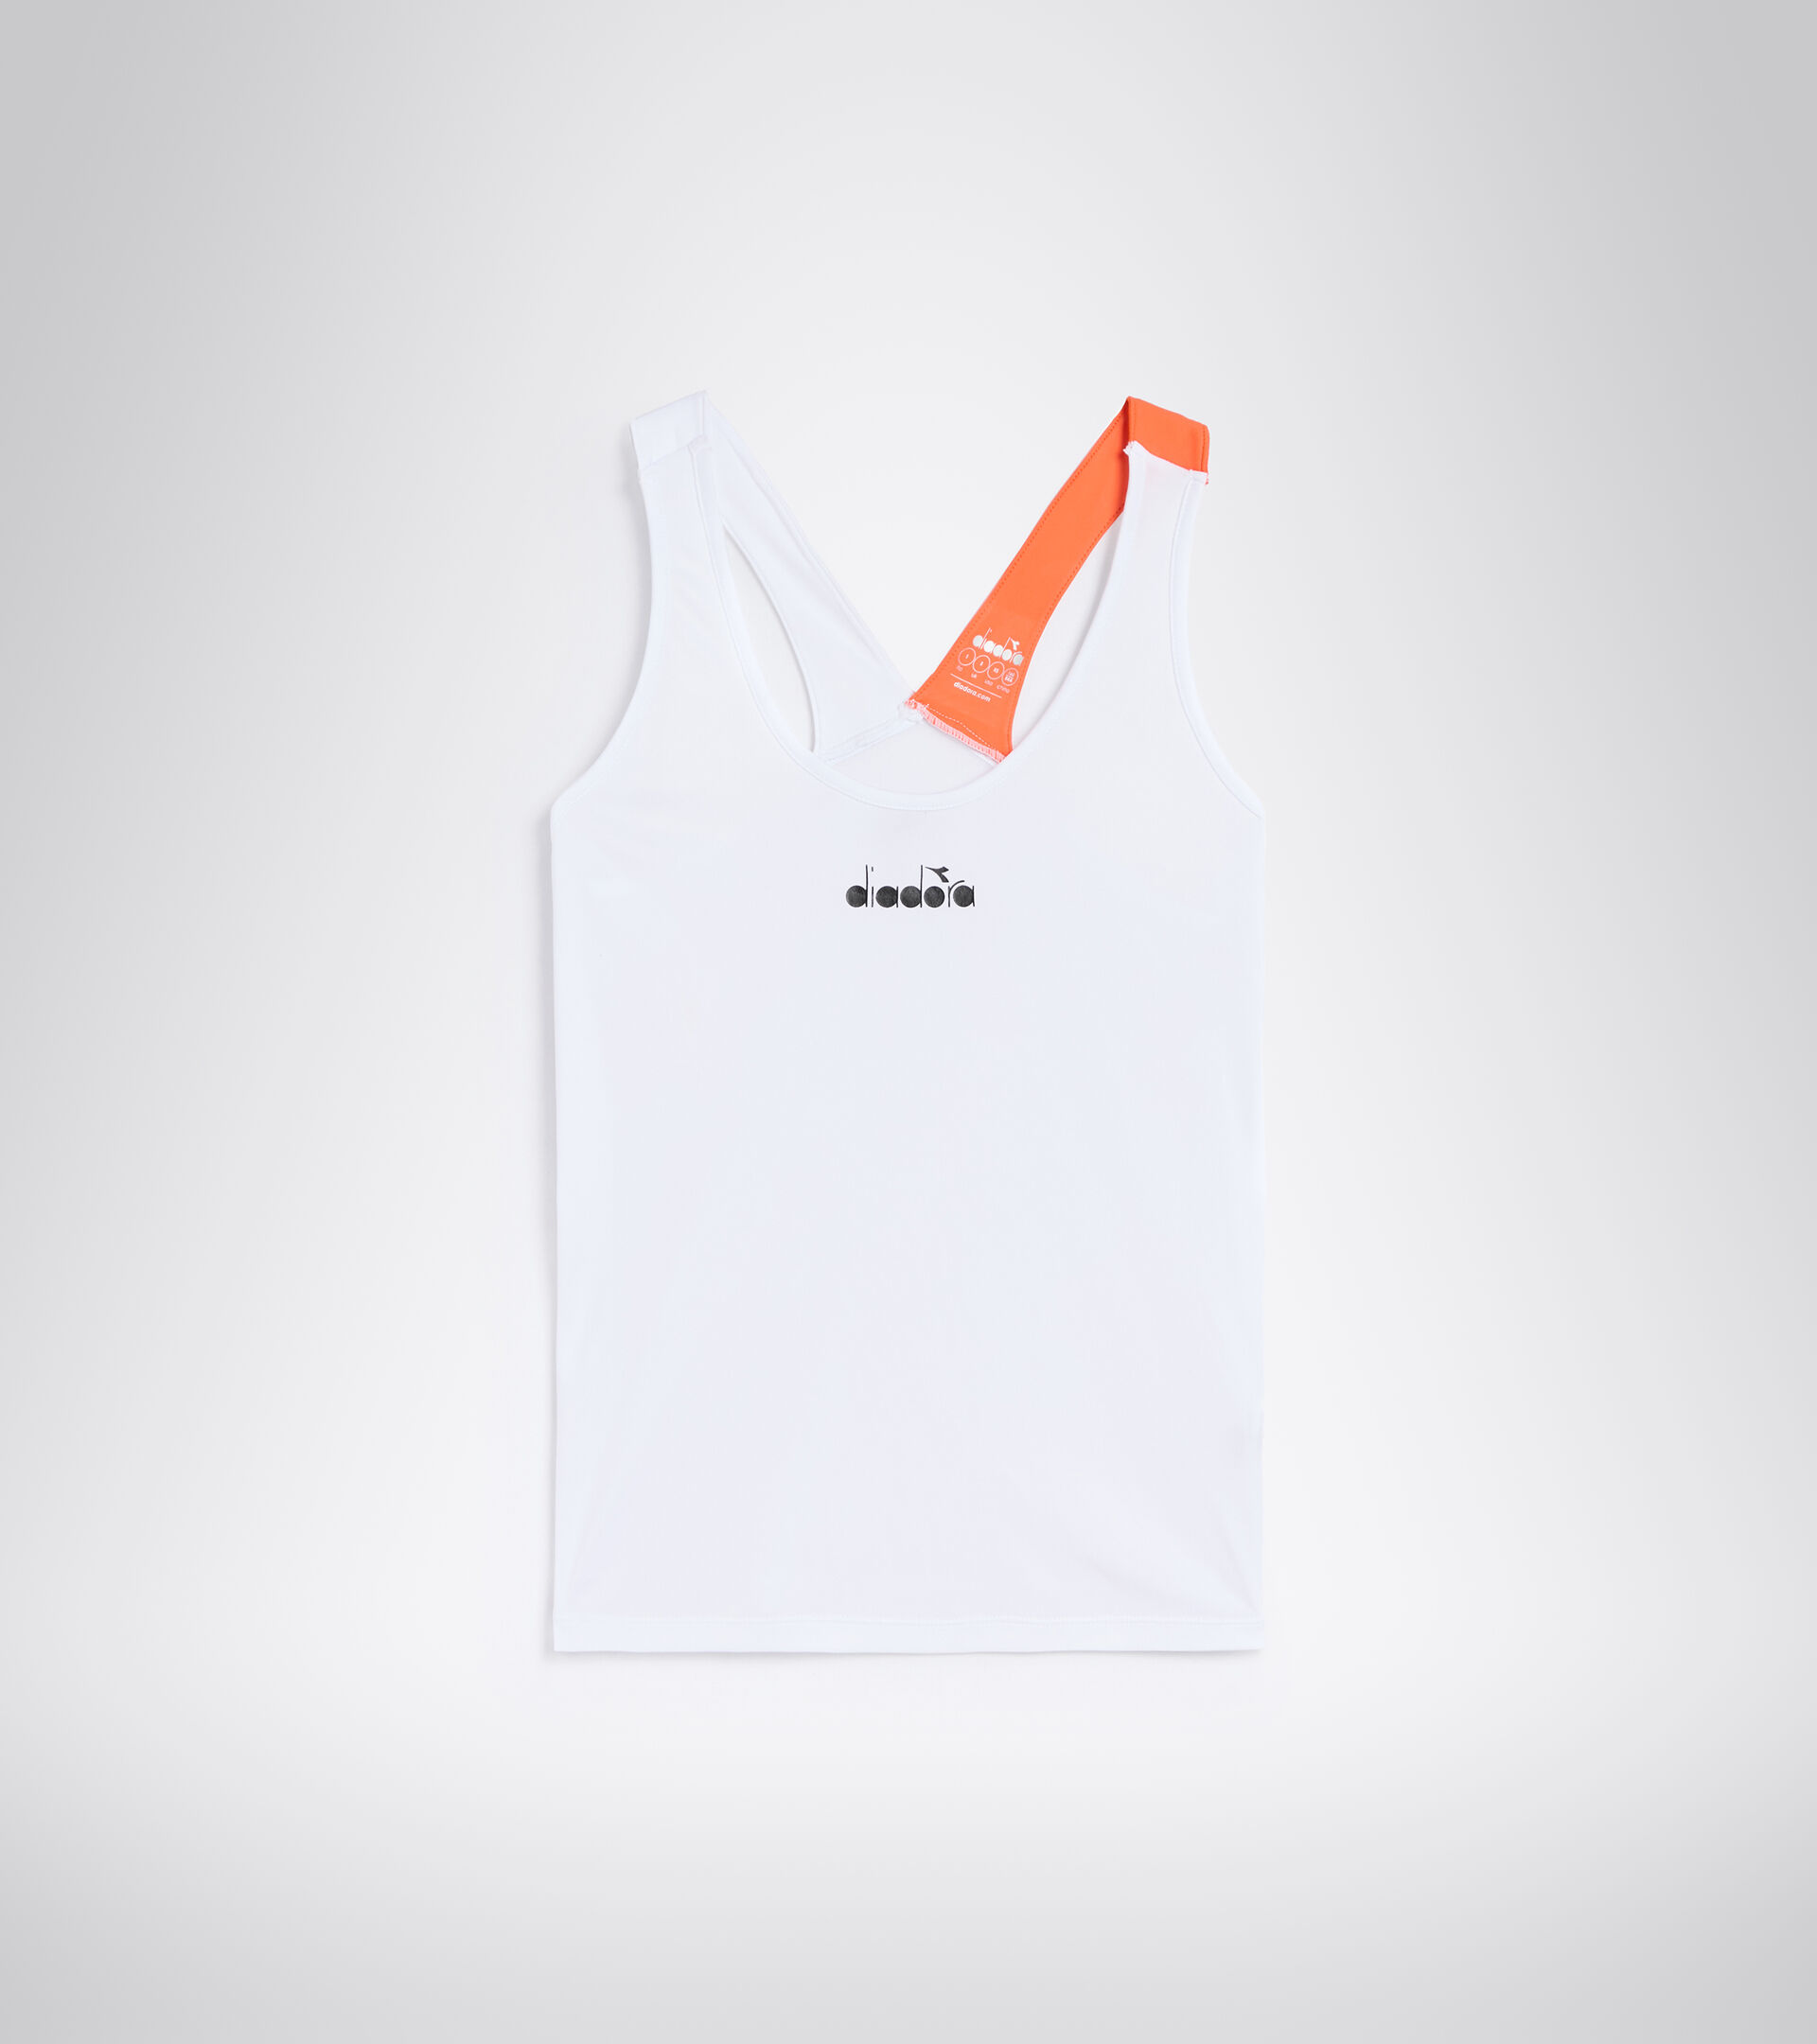 Camiseta sin mangas de tenis - Mujer L. TANK BLANCO VIVO - Diadora